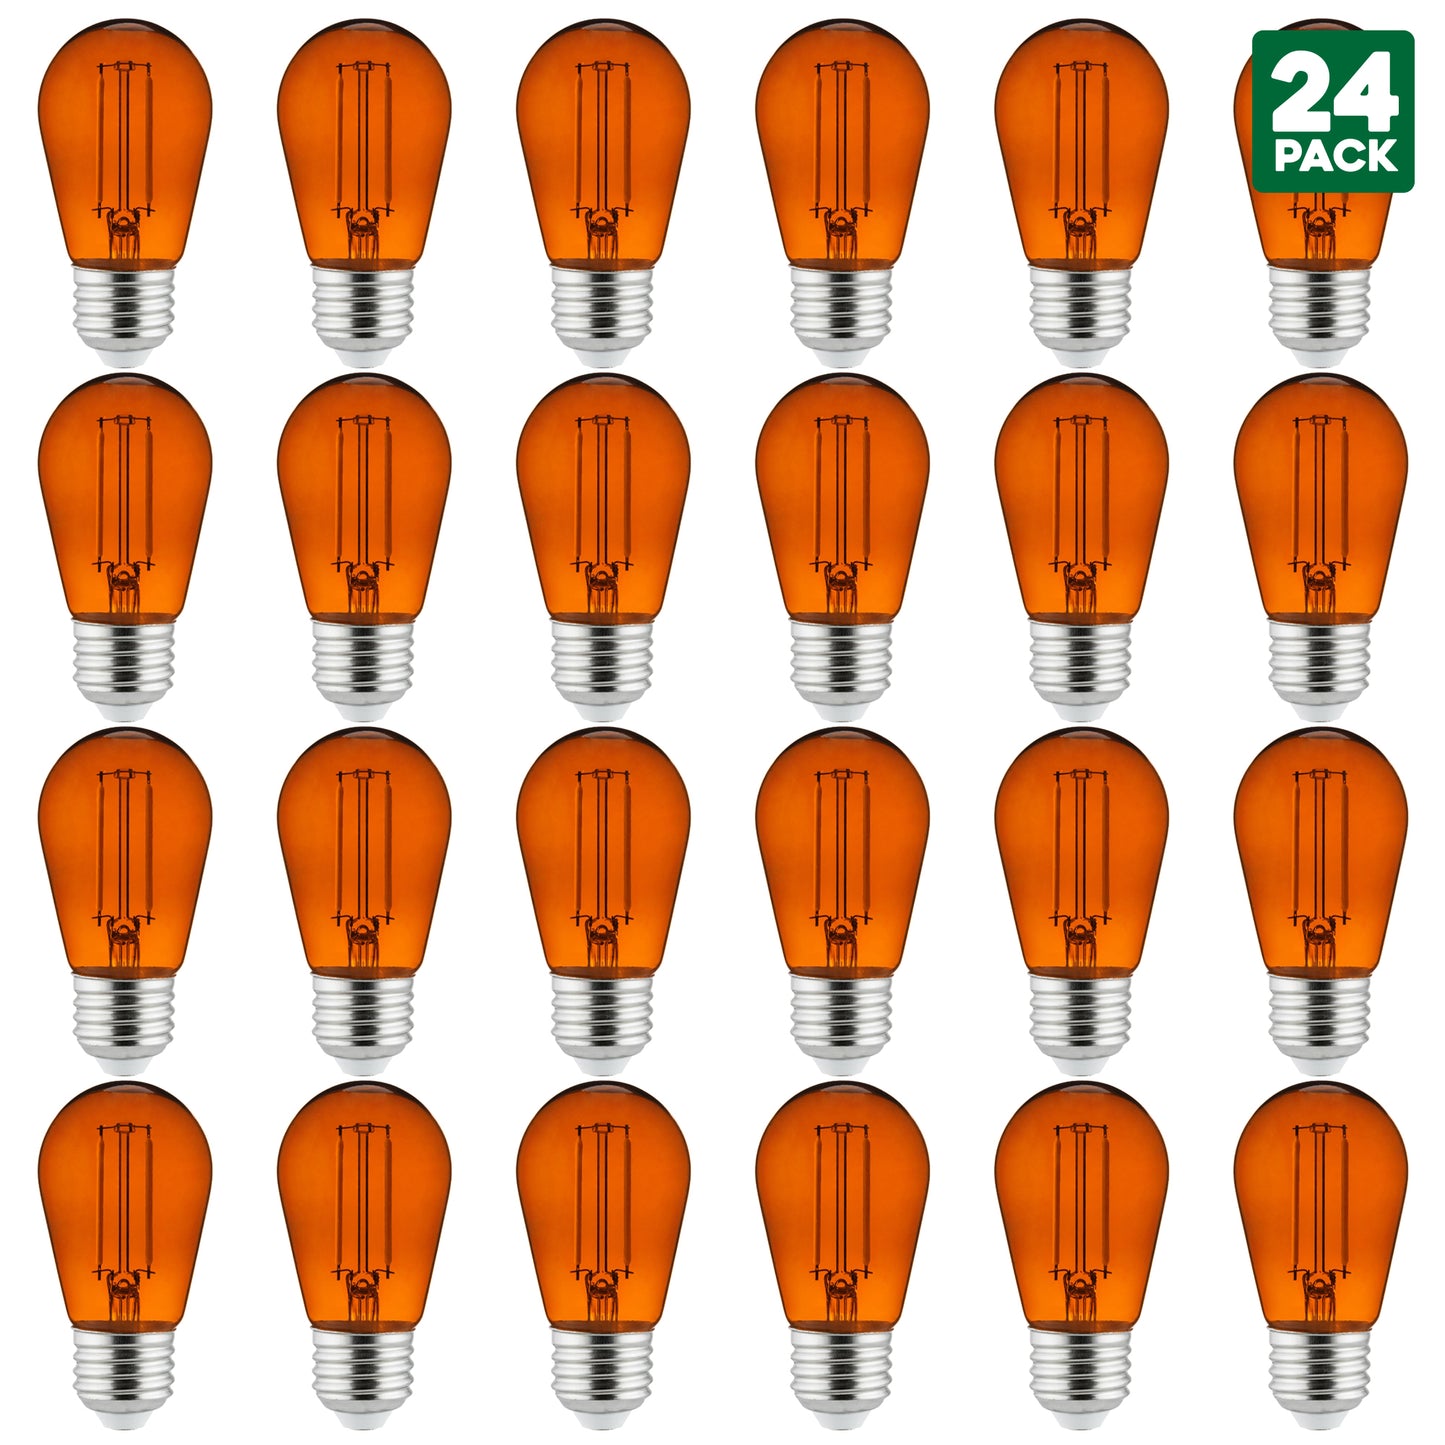 Sunlite LED Transparent Orange Colored S14 Medium Base (E26) Bulb - Parties, Decorative, and Holiday 15,000 Hours Average Life